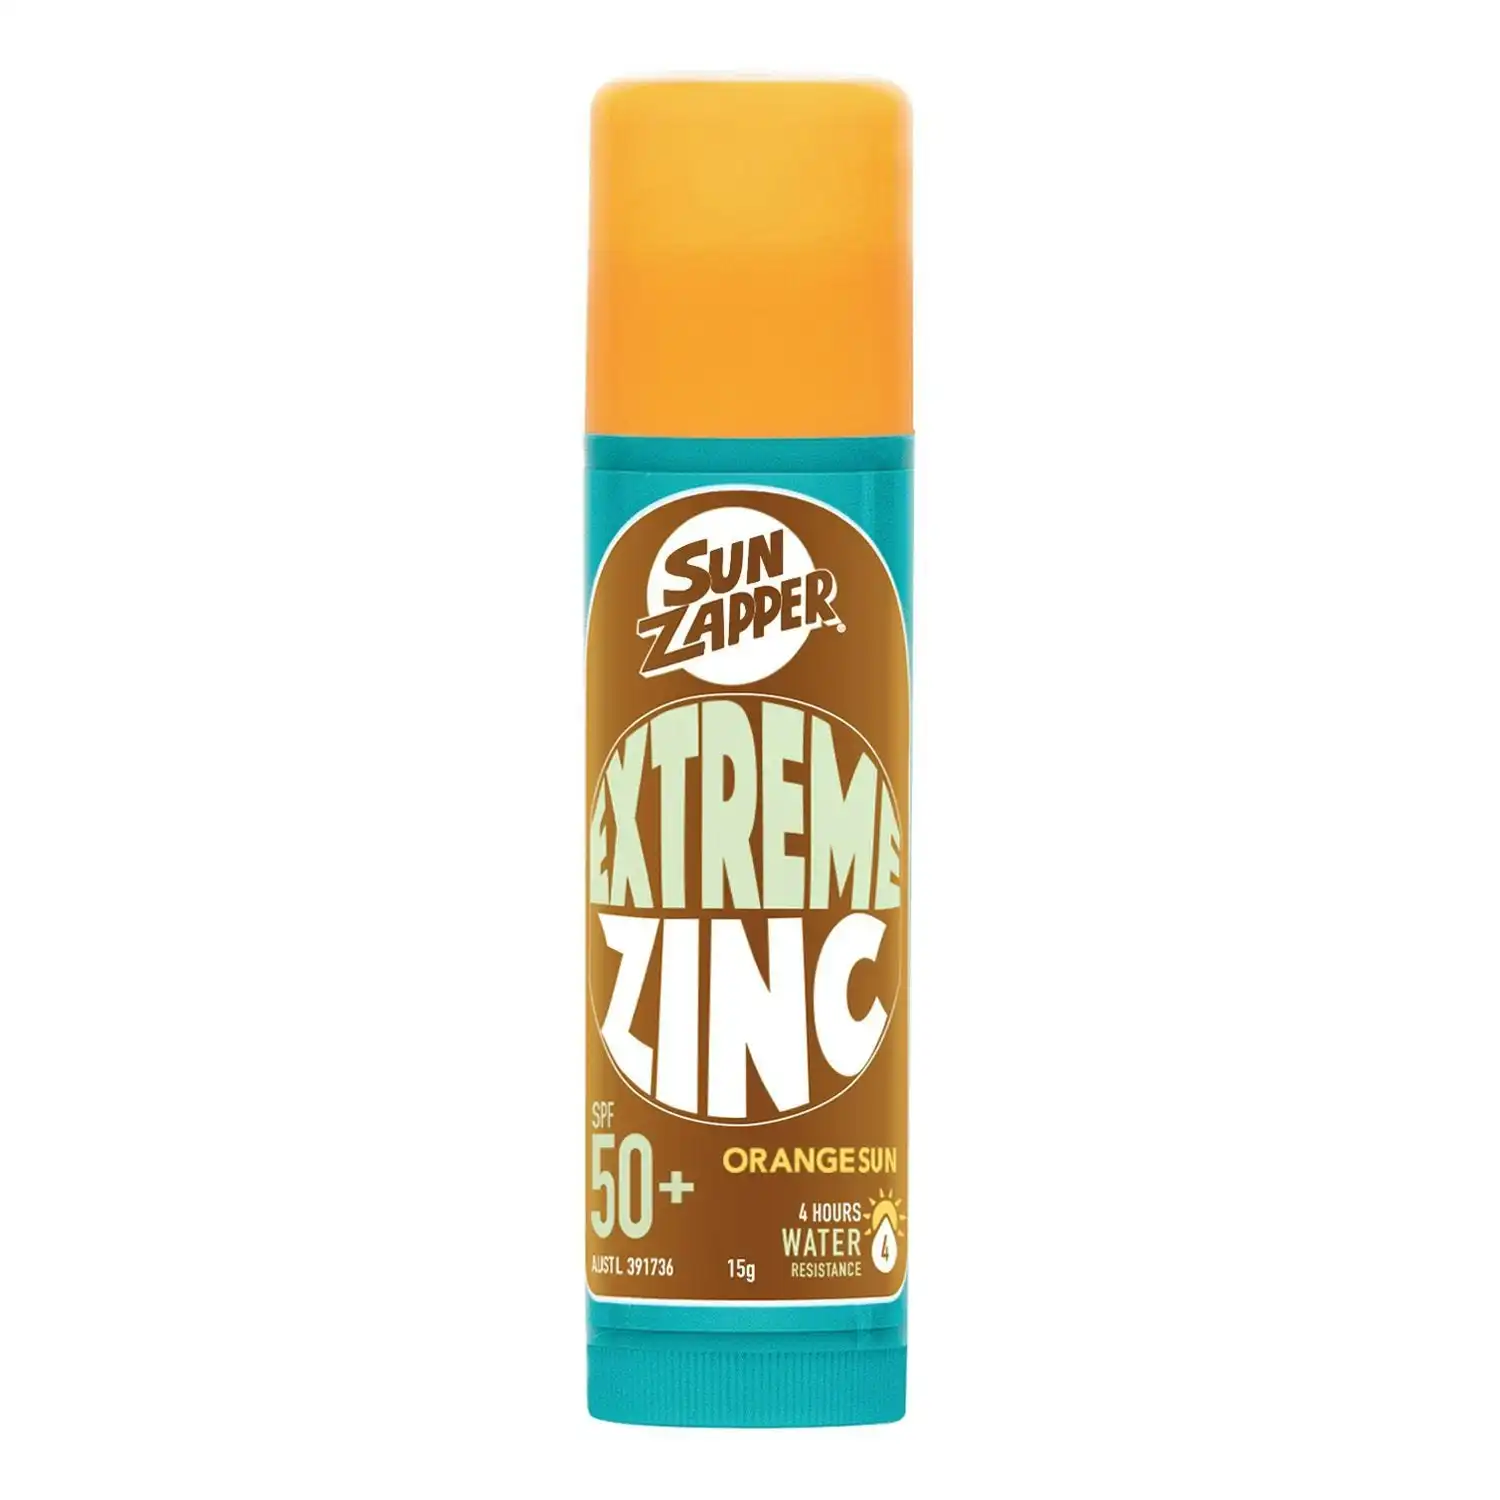 Sun Zapper Extreme Zinc Stick 15g Orange Sun